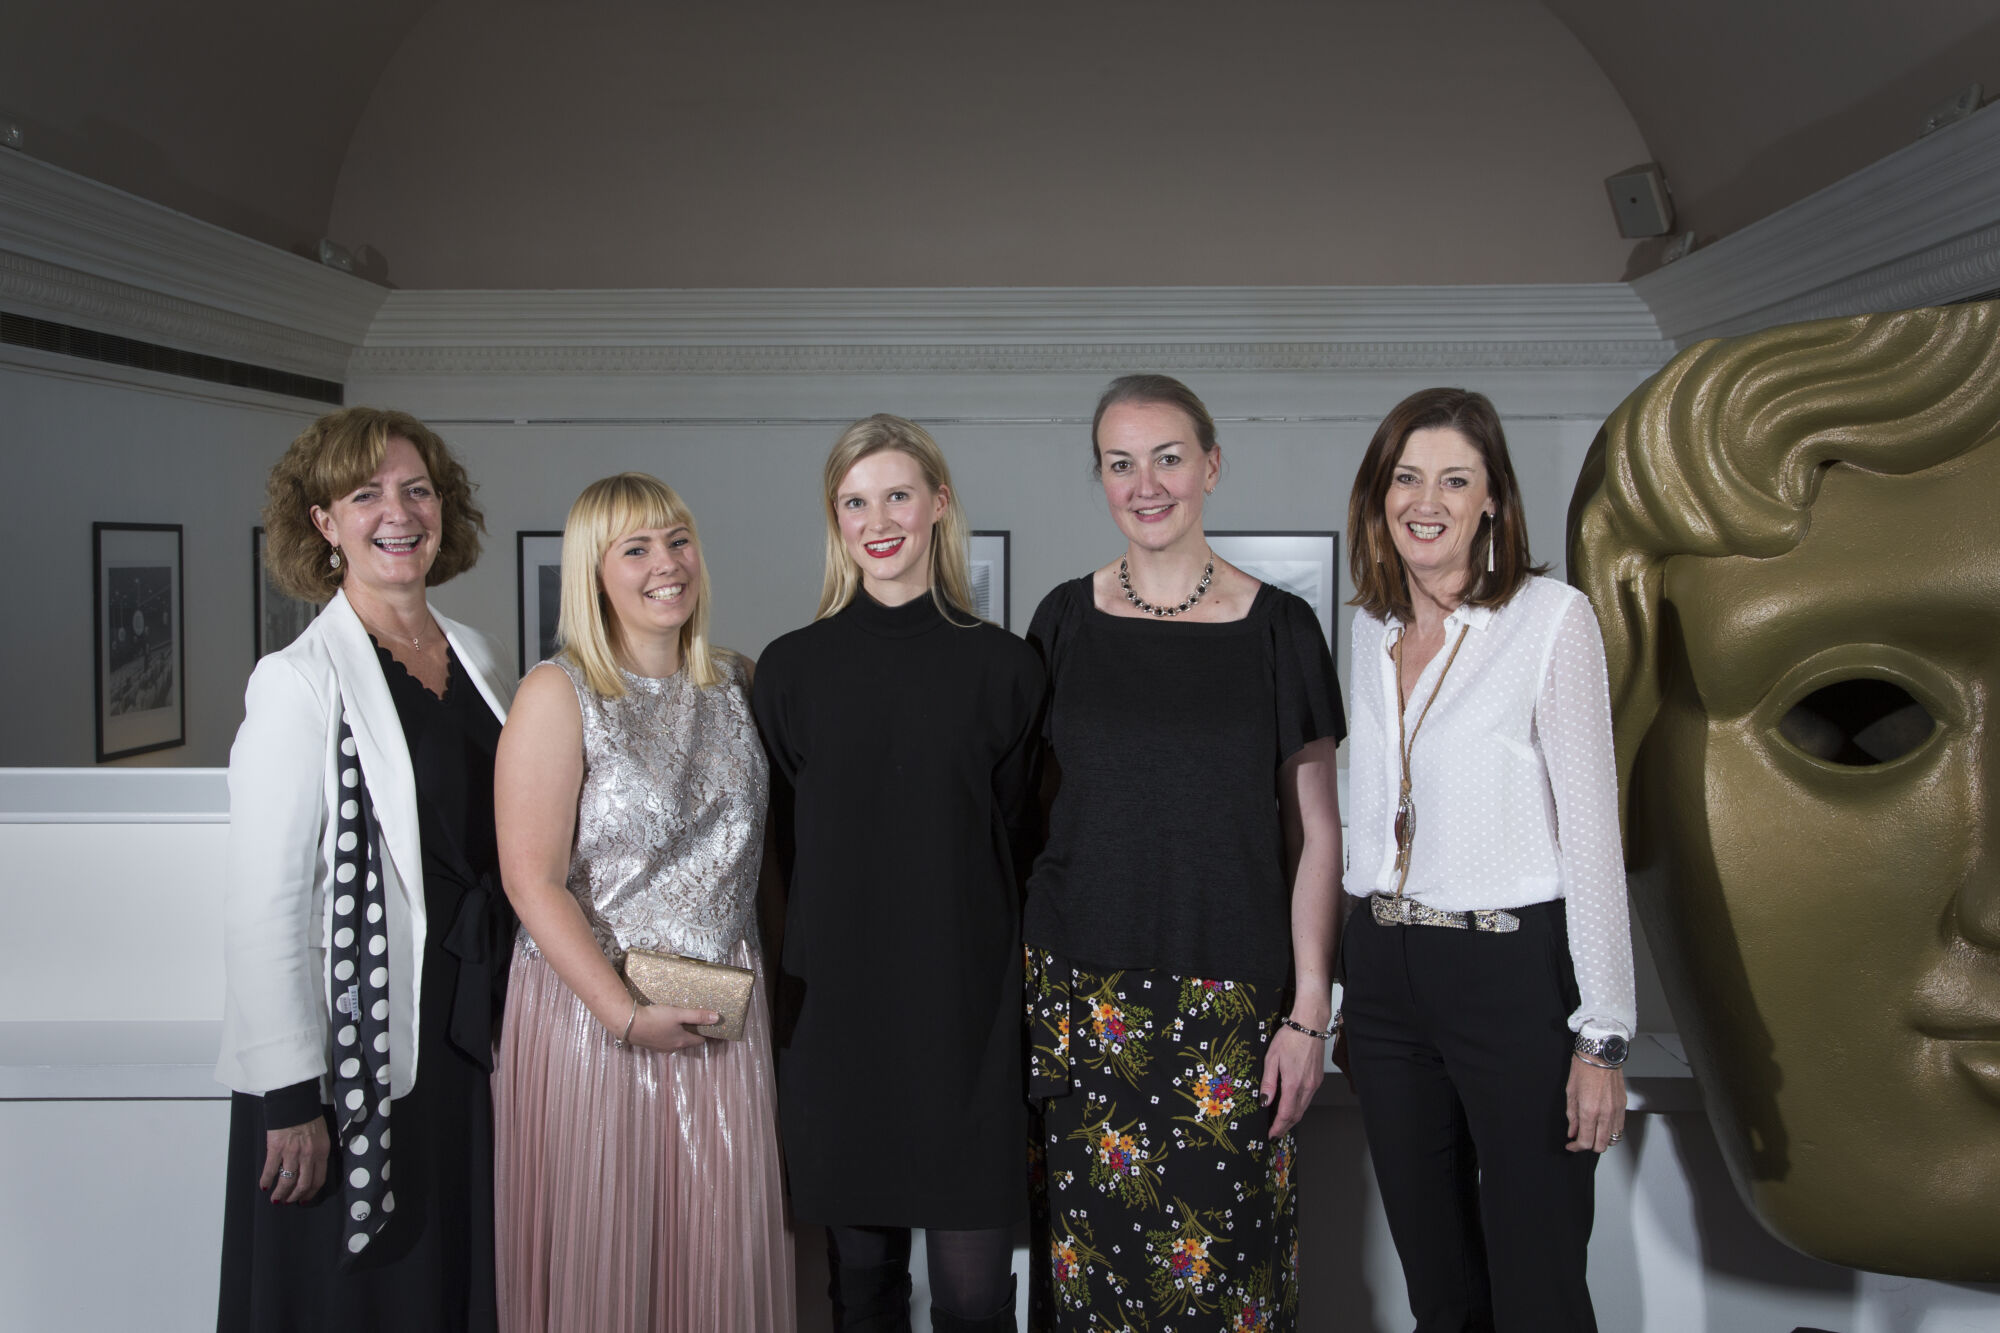 The Wick - The BAFTA/Prince William Scholarship recipients from left to right; Hannah Cole, Hazel Allan & Daisy Fernandez with Sara Putt & Amanda Berry (CEO, BAFTA),

Courtesy of BAFTA